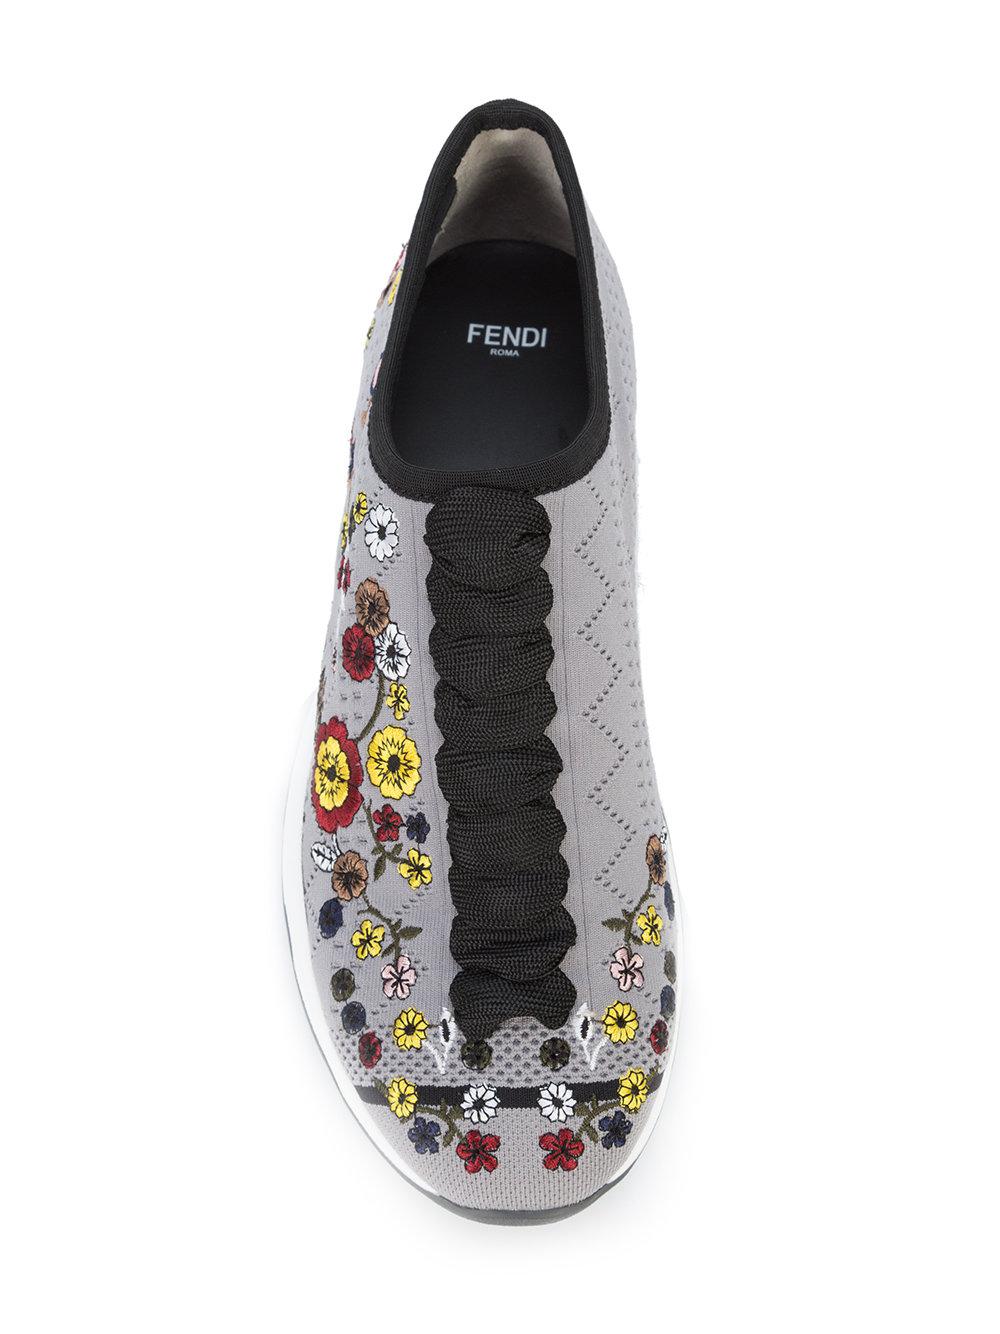 Fendi Neoprene Jacquard Floral Sneakers 